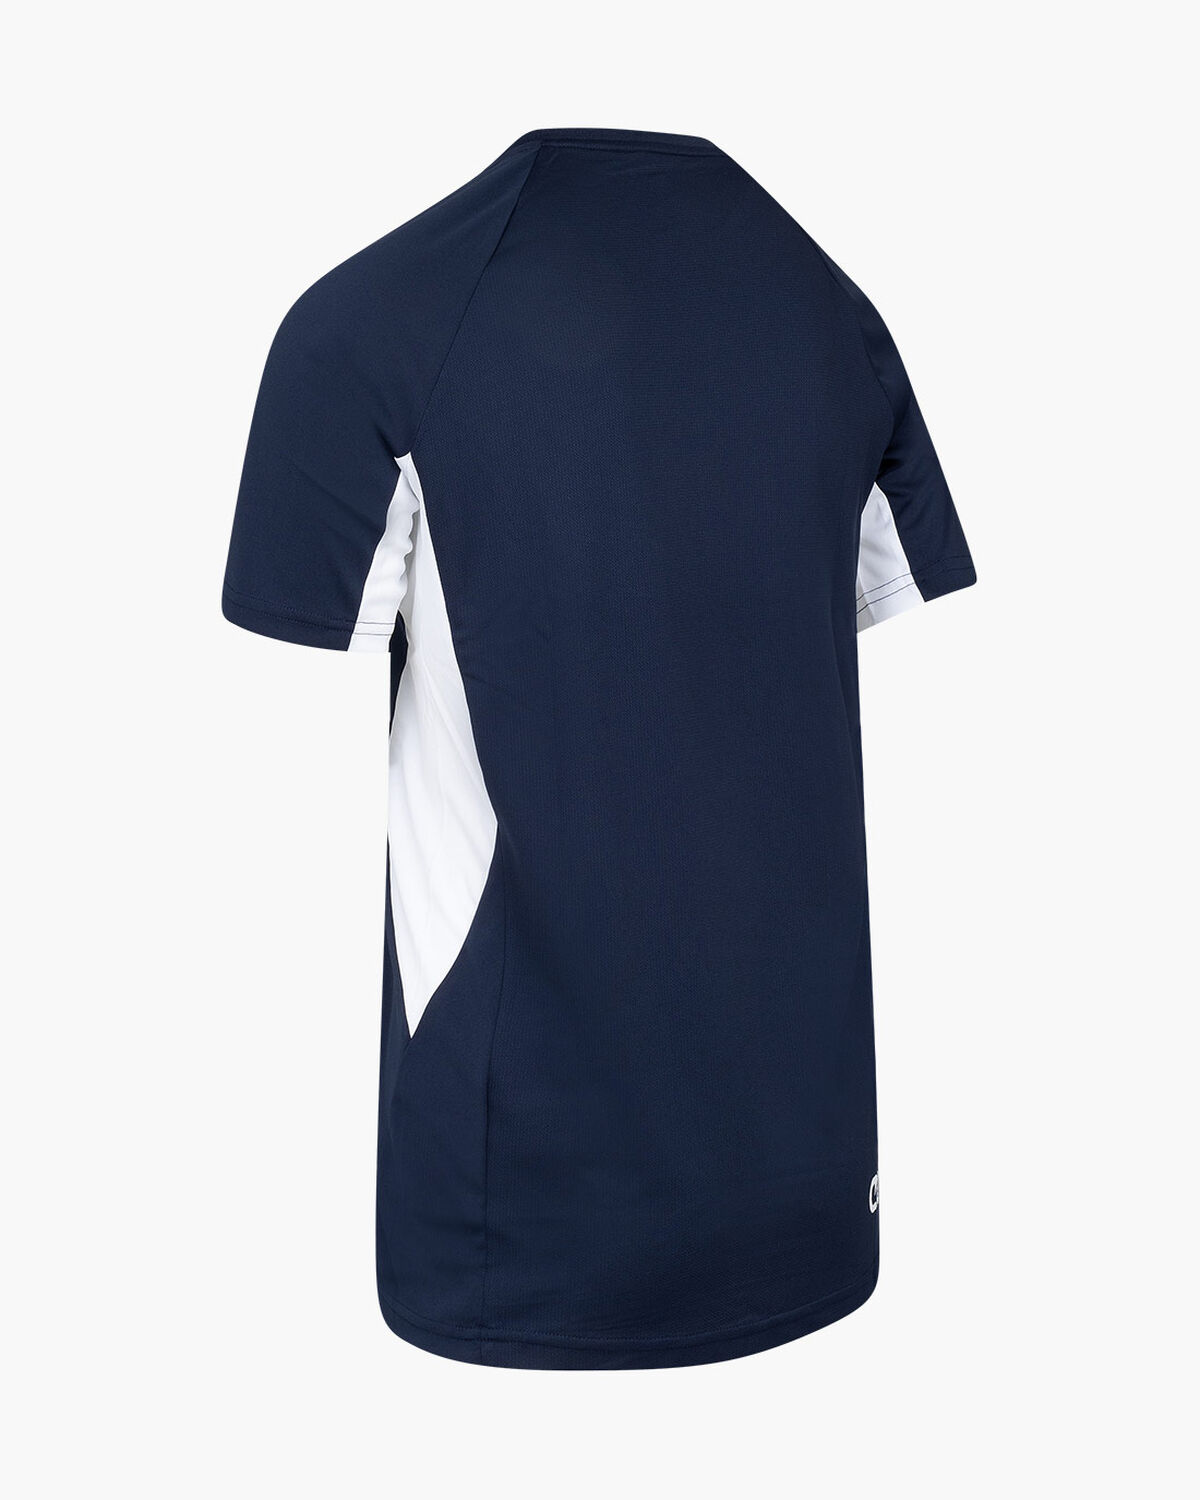 Cruyff Tech Turn Shirt Senior, Navy/White, hi-res